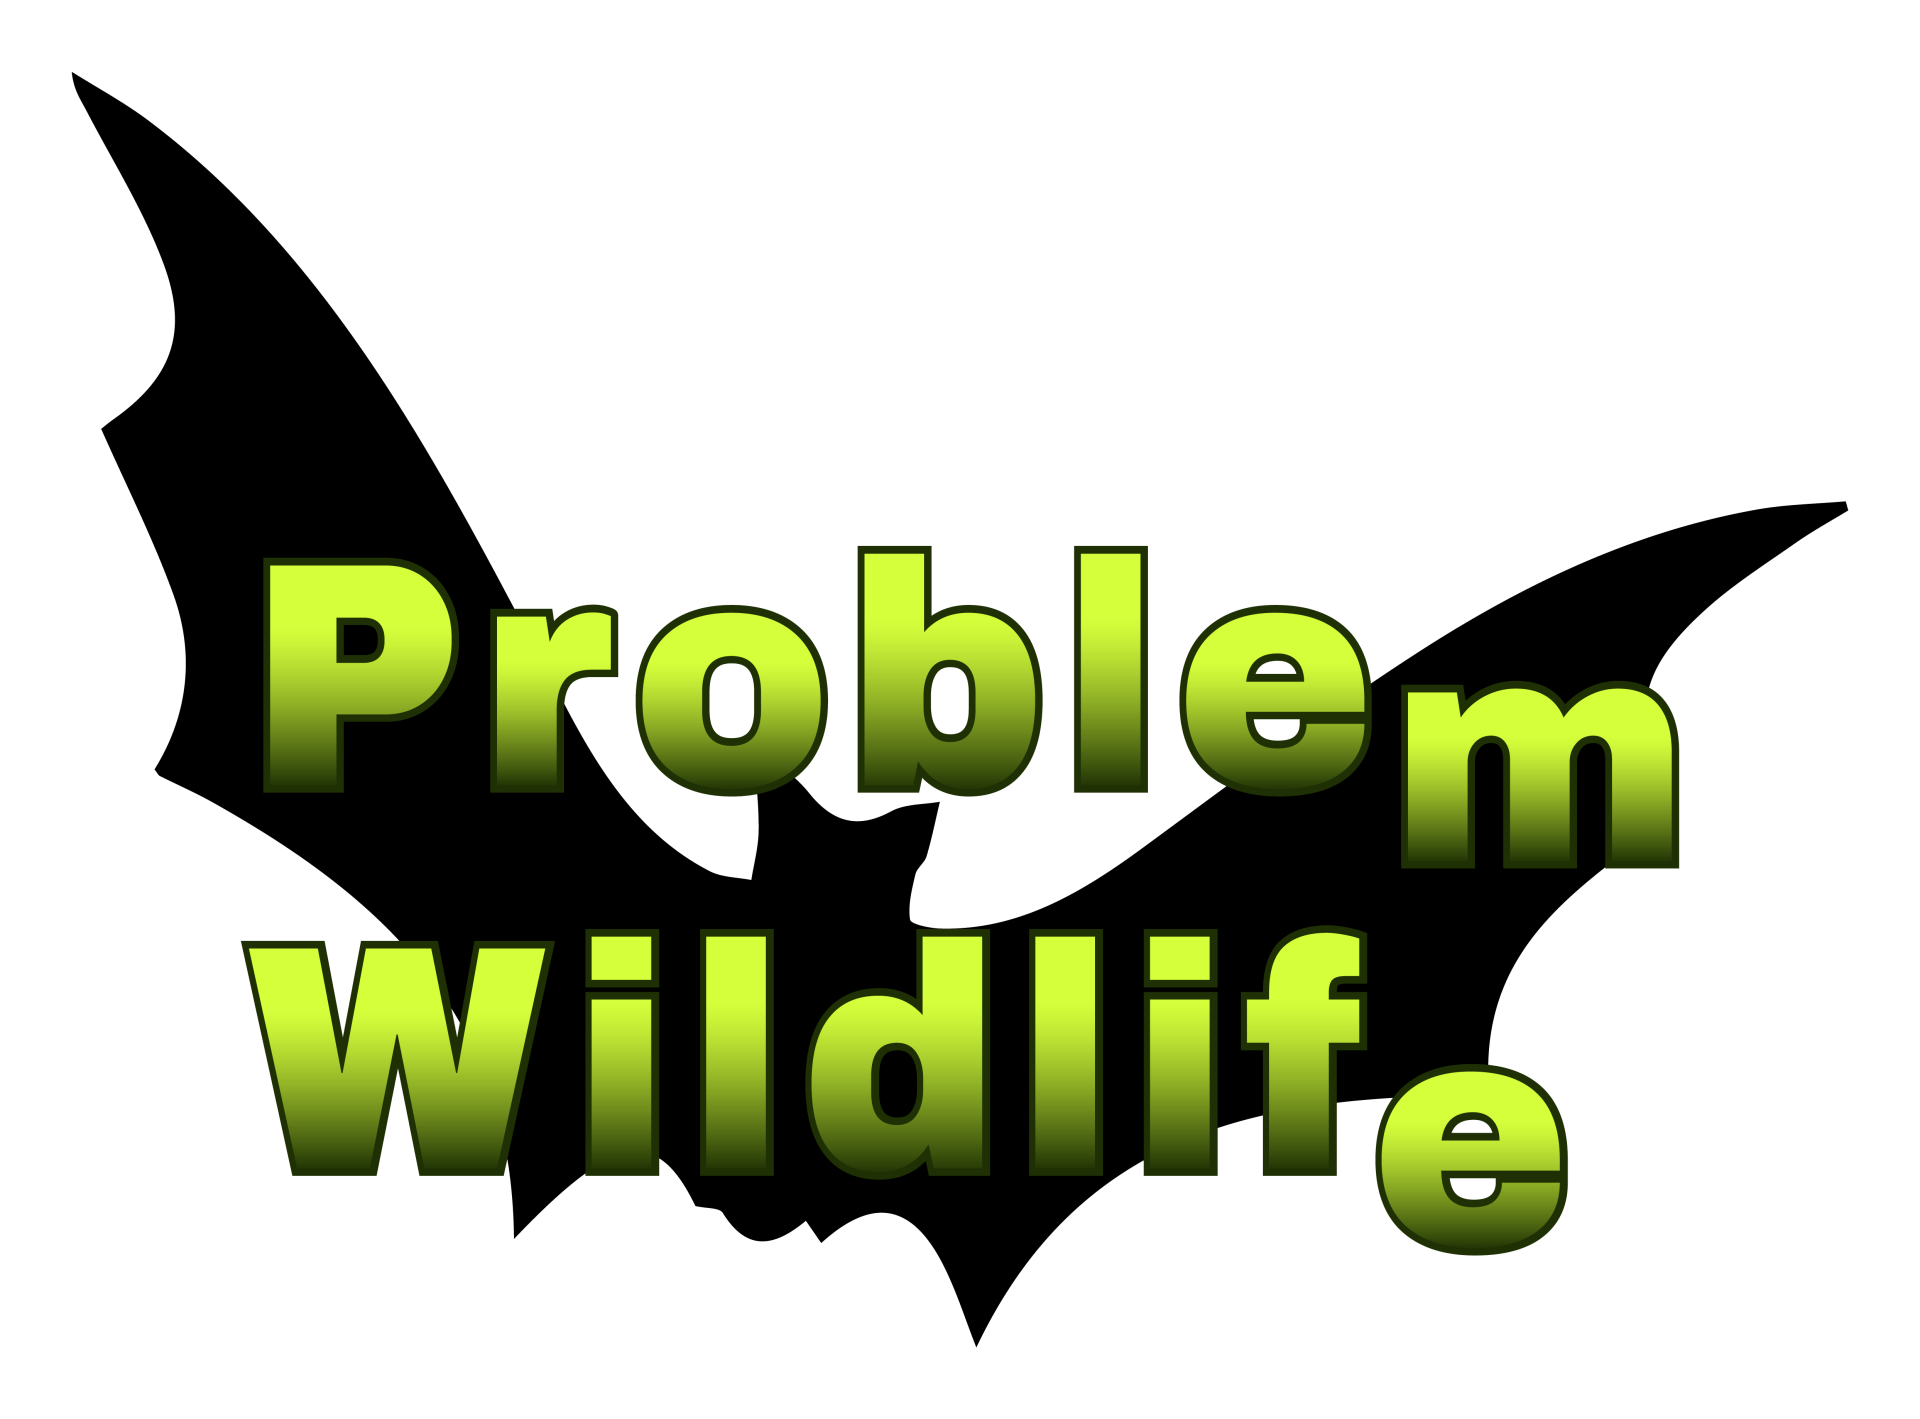 Problem Wildlife